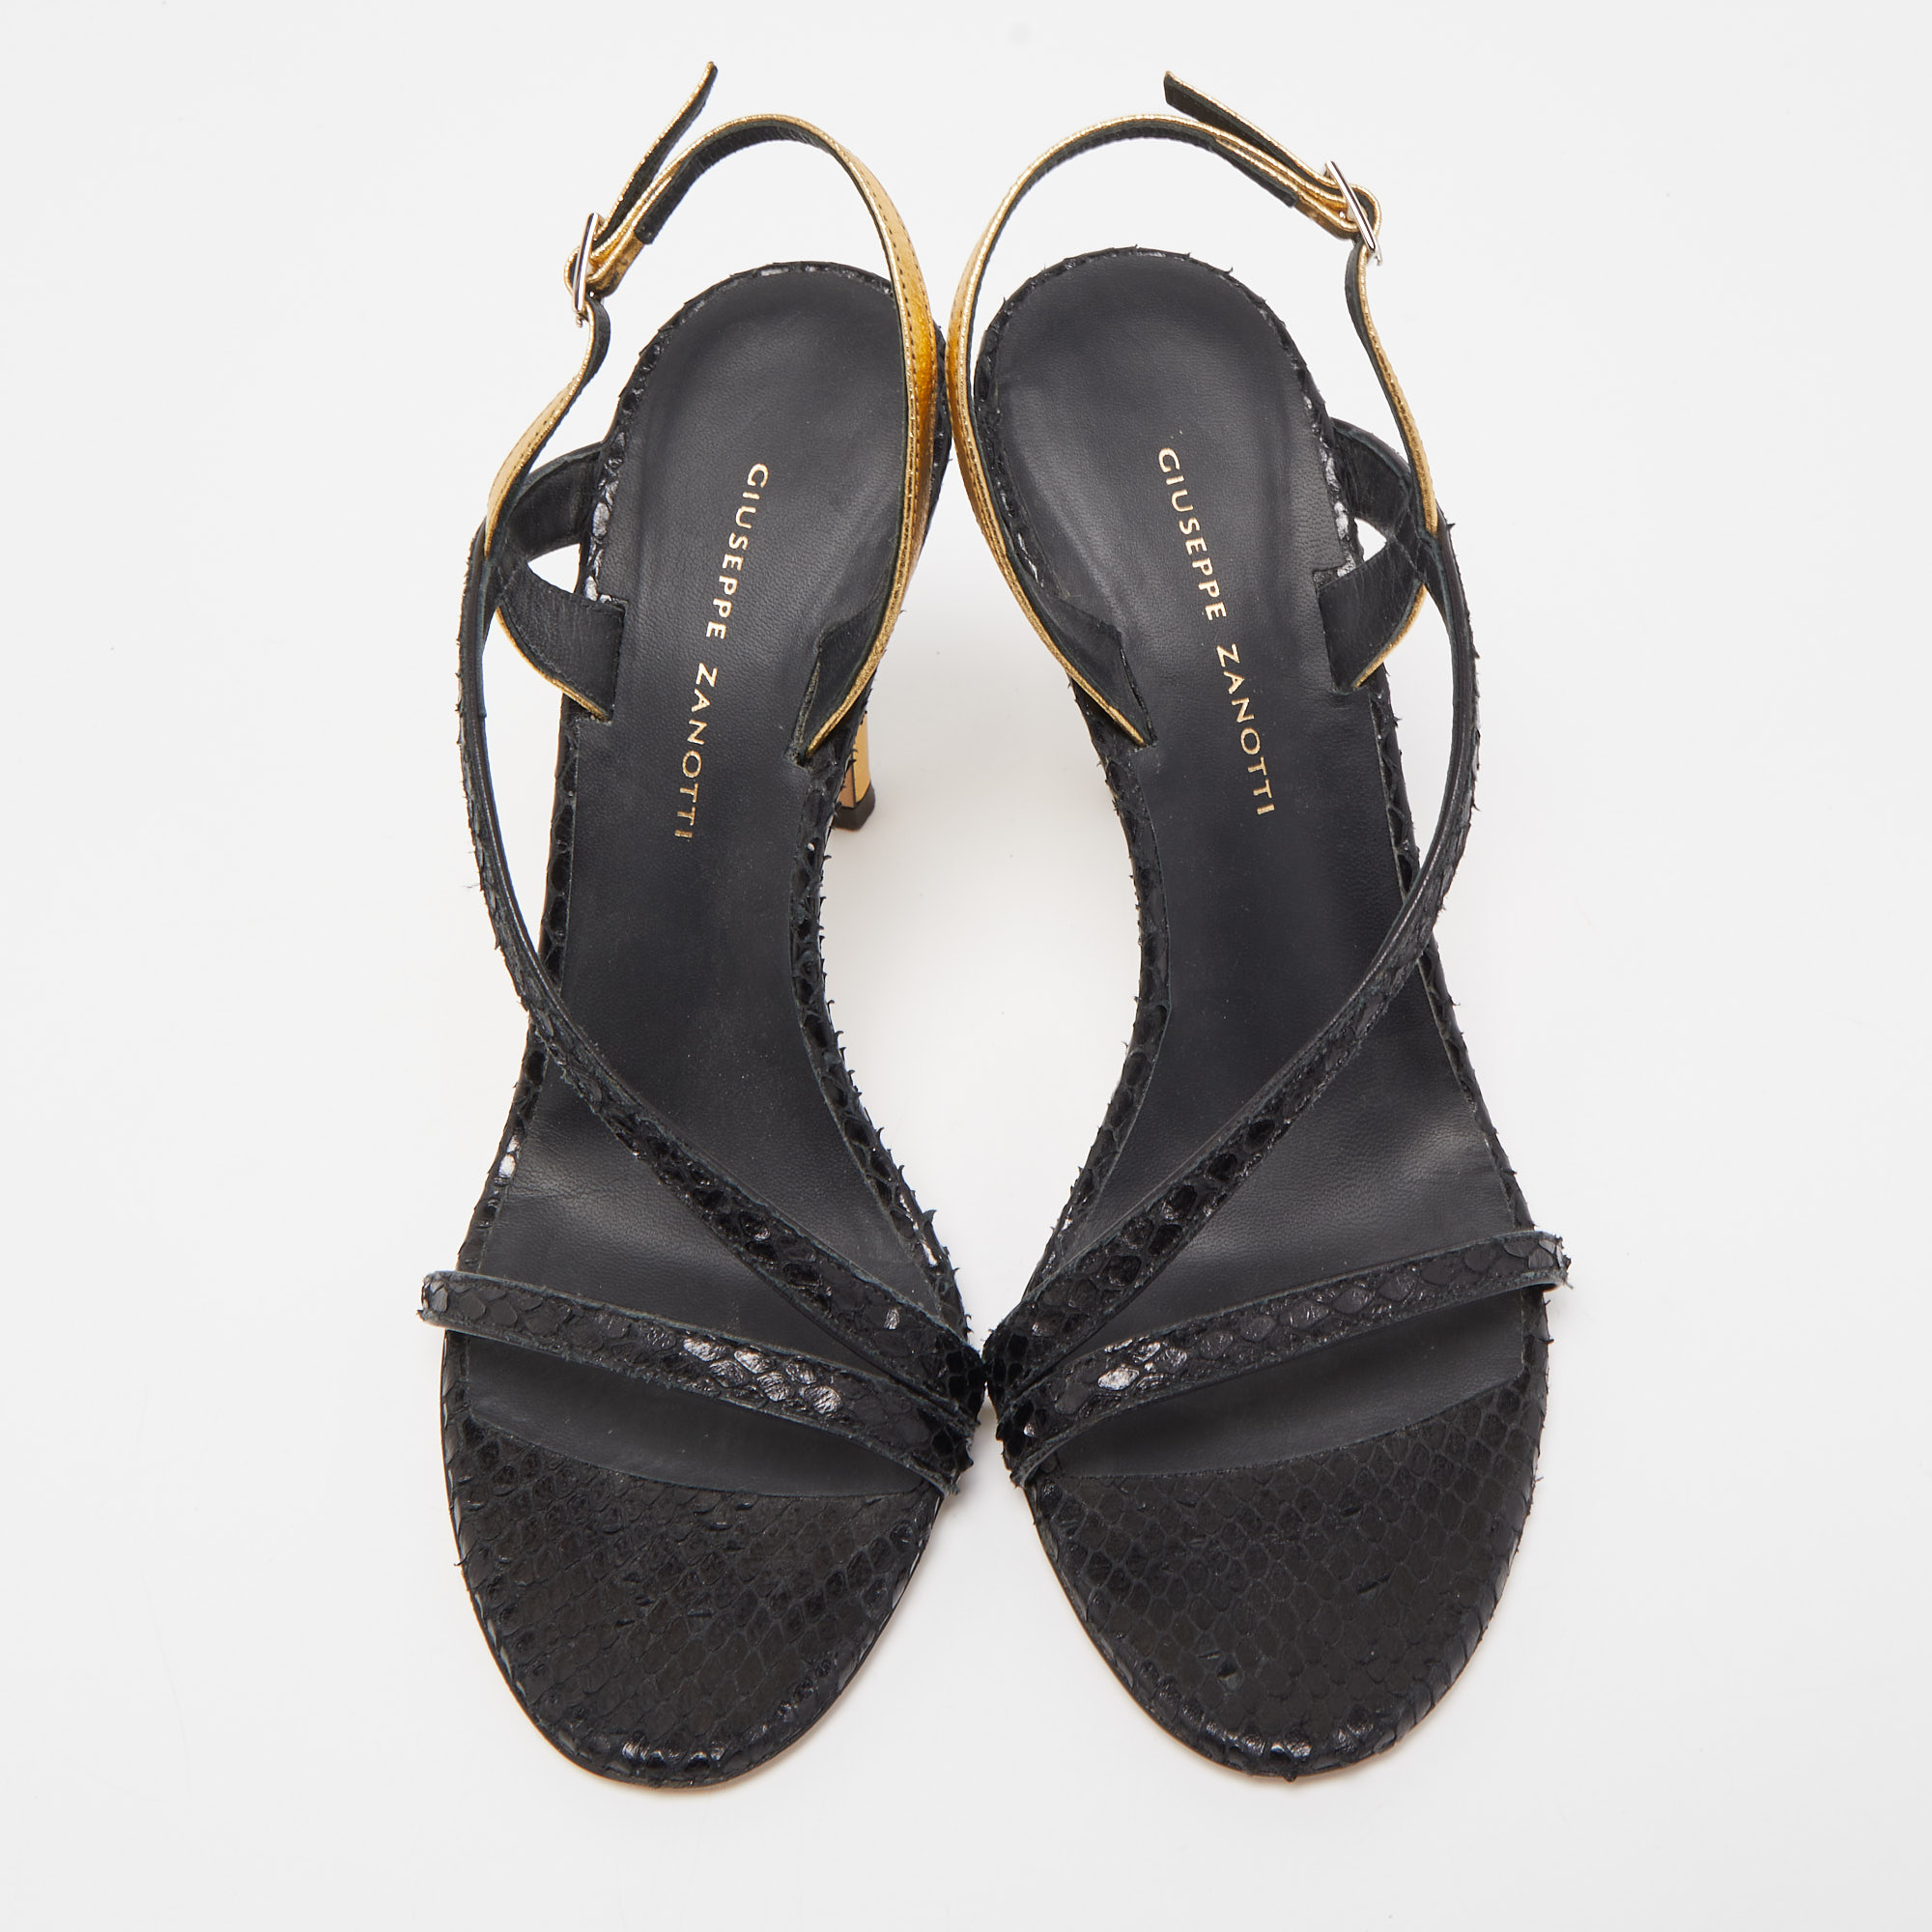 Giuseppe Zanotti Black/Gold Python Embossed And Leather Slingback Sandals Size 37